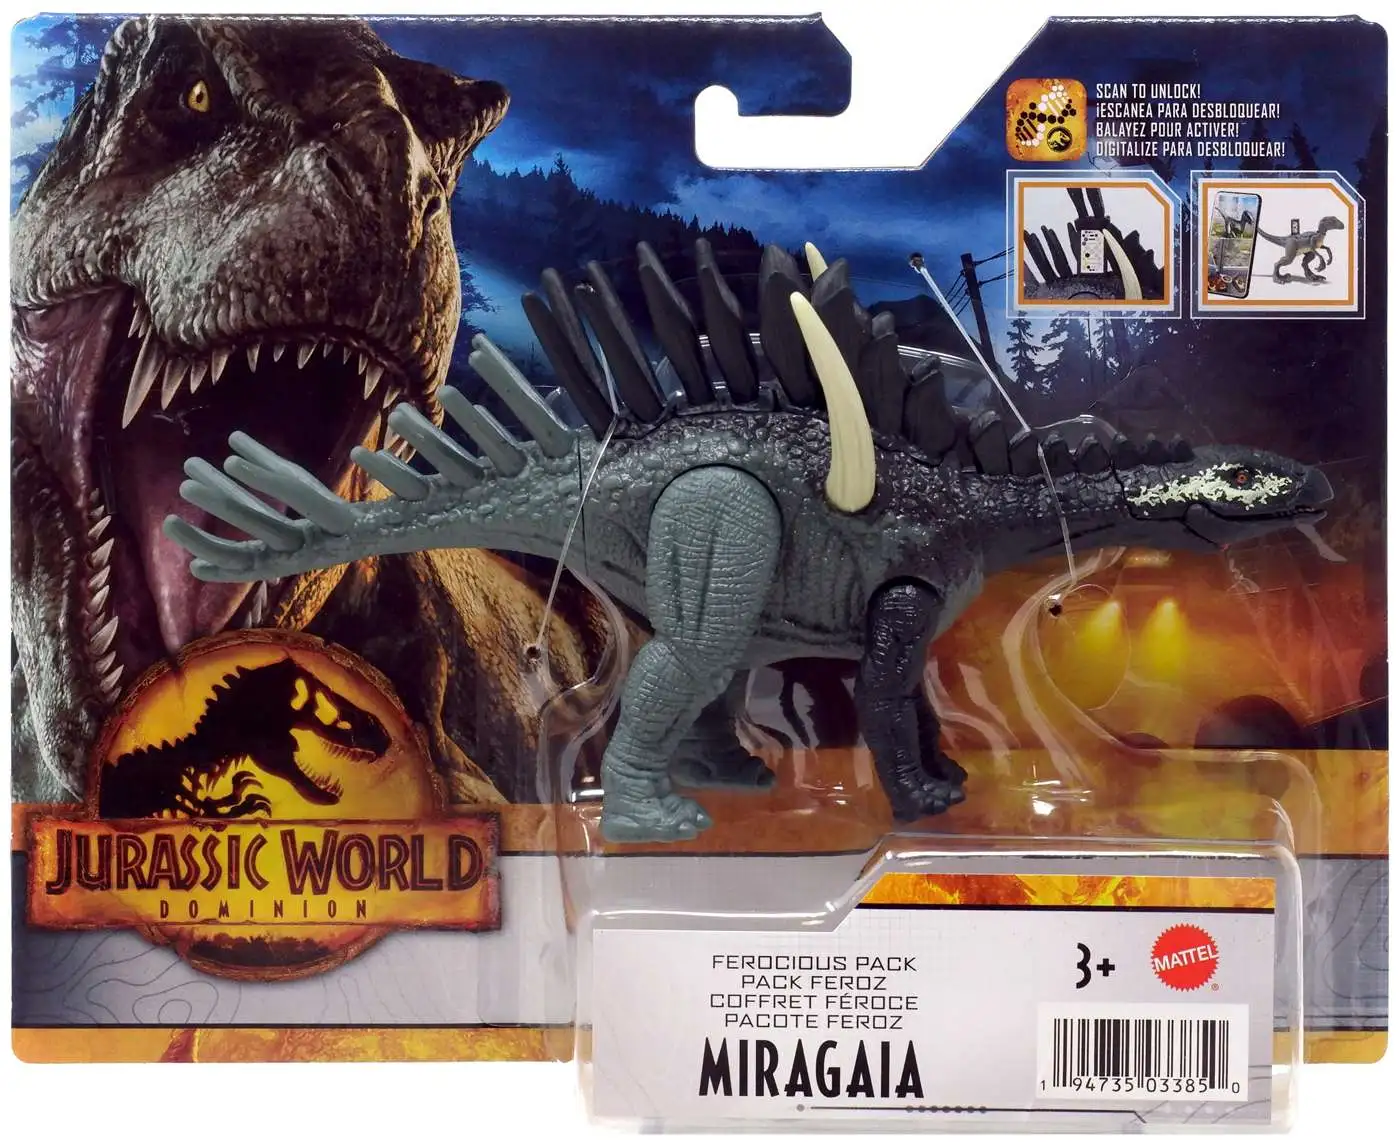 Jurassic World Dominion Ferocious Pack Miragaia Action Figure